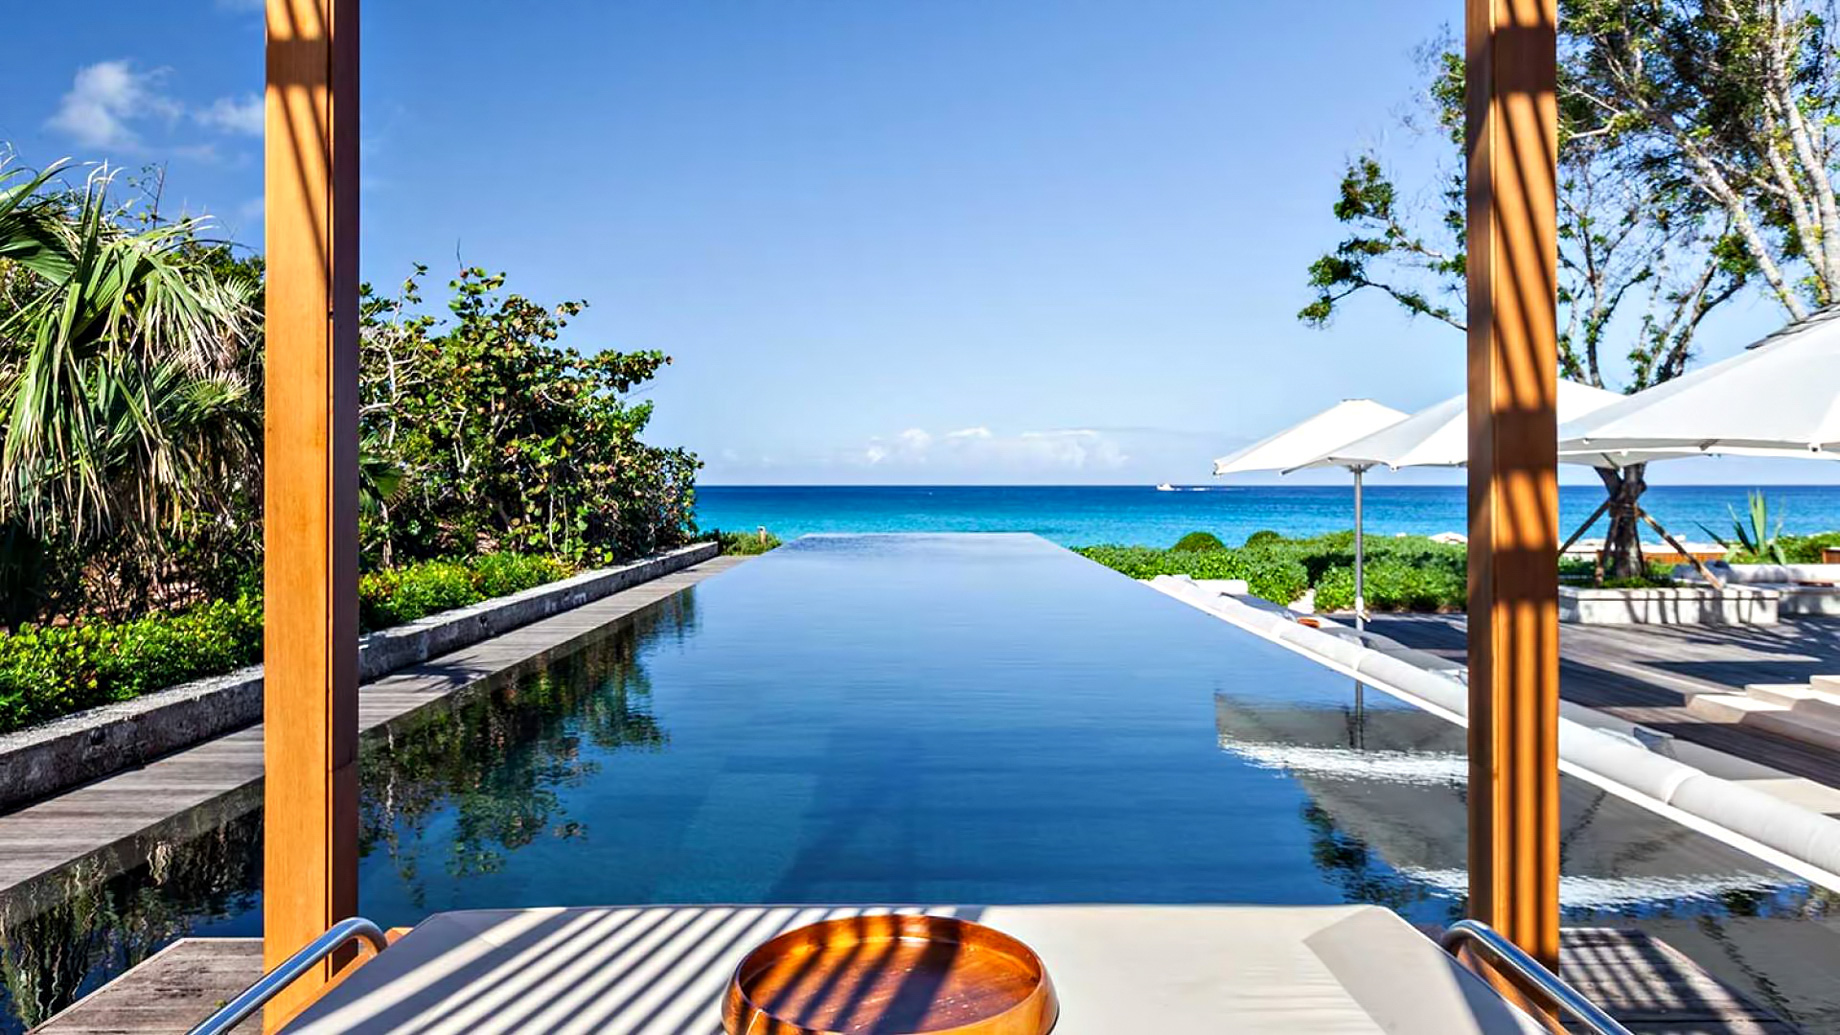 Amanyara Resort - Providenciales, Turks and Caicos Islands - Artist Ocean Villa Infinity Pool Deck View